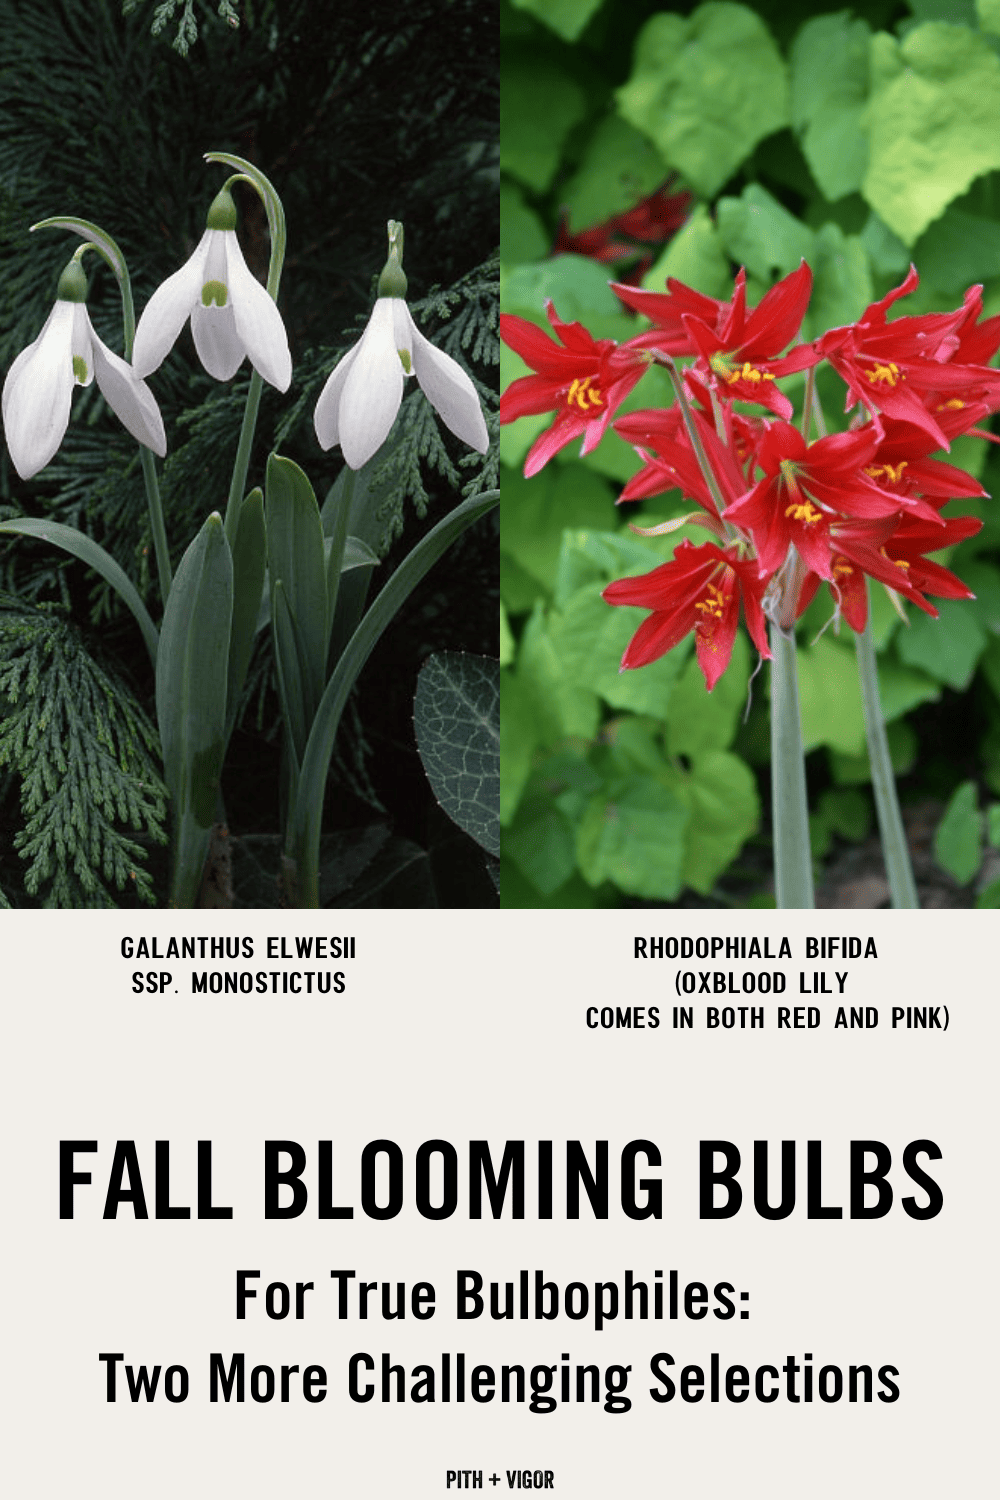 Autumn flowering fall blooming bulbs. Galanthus elwesii and rhodophiala bifida (oxblood lily)